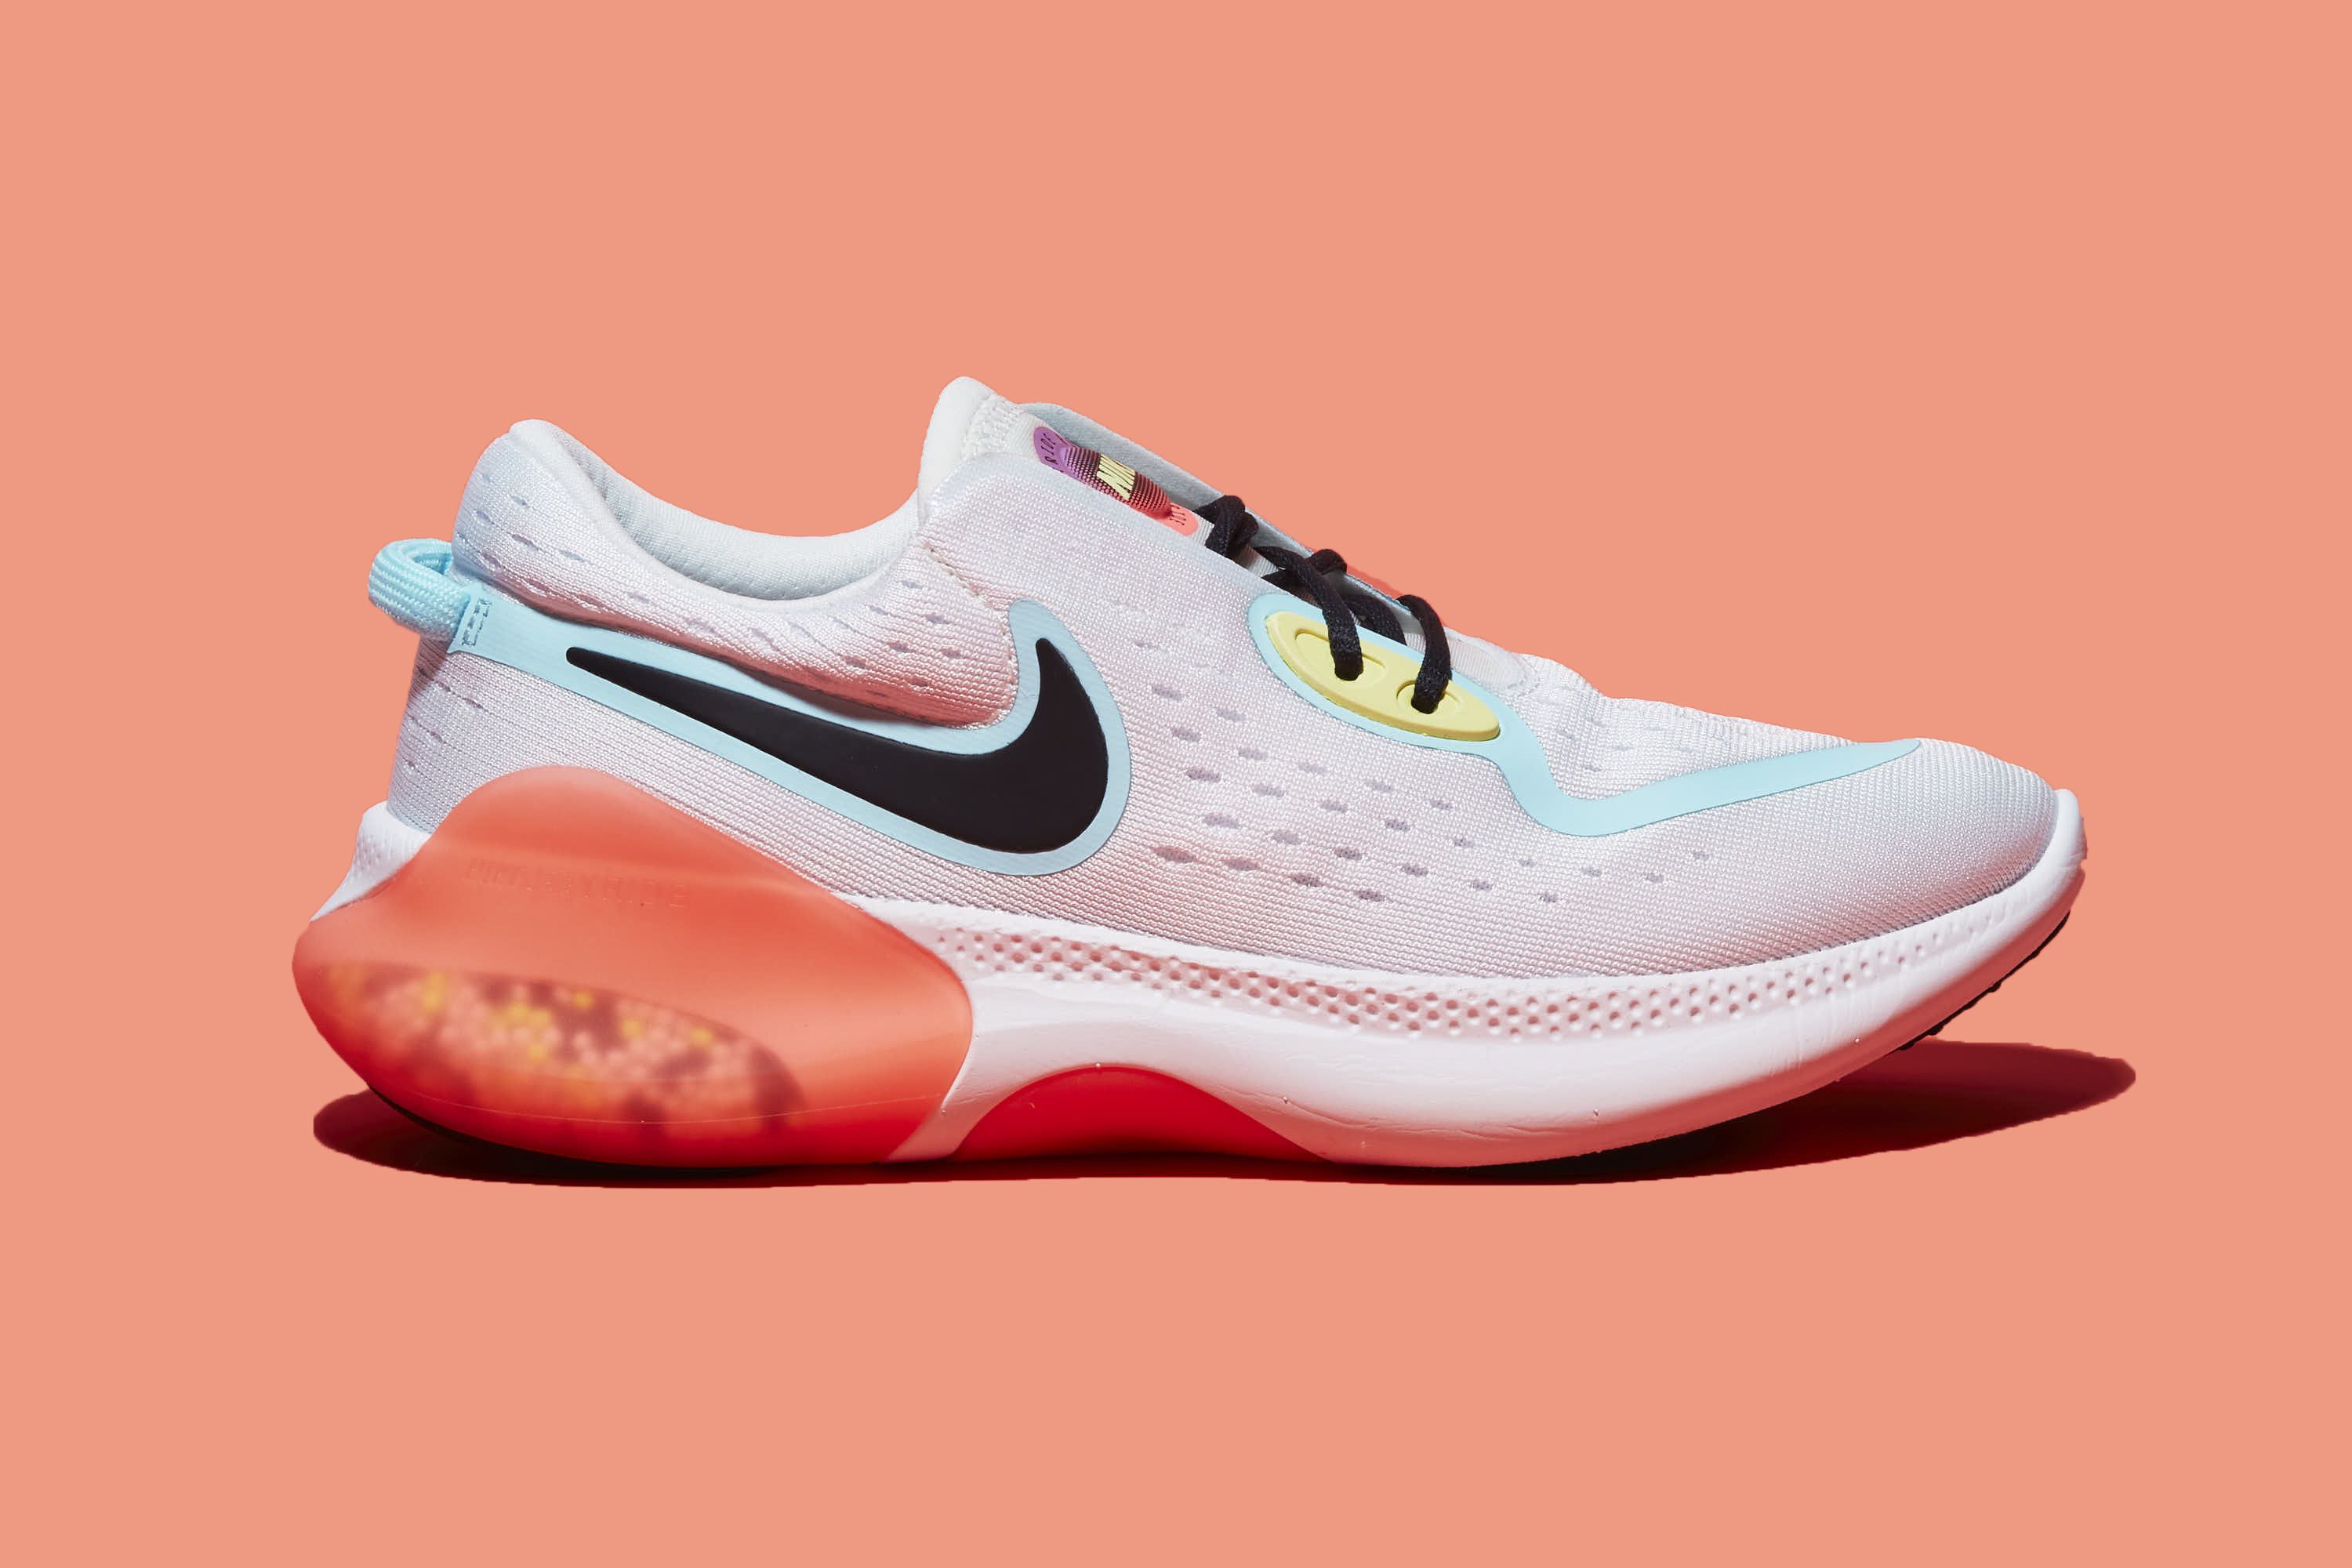 دعاسات ايكيا Nike Joyride Dual Run | Cushioned Shoes for New Runners دعاسات ايكيا